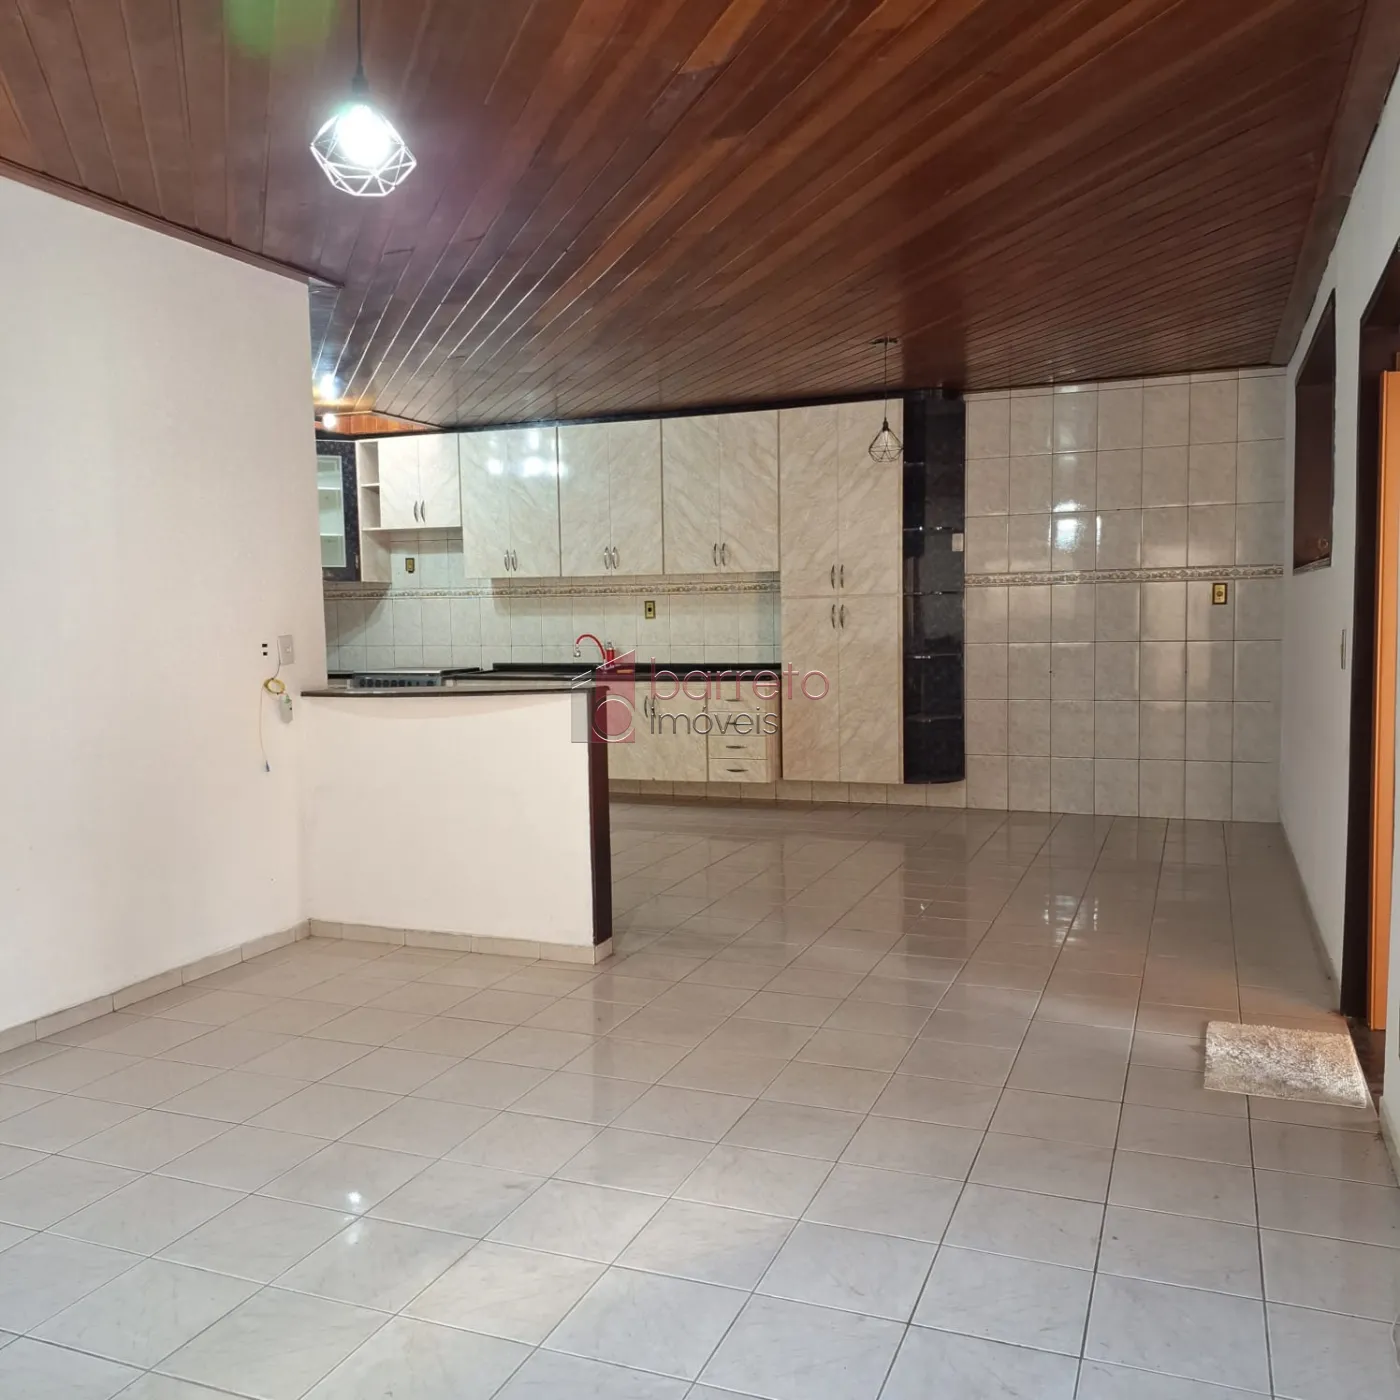 Comprar Casa / Térrea em Louveira R$ 750.000,00 - Foto 6